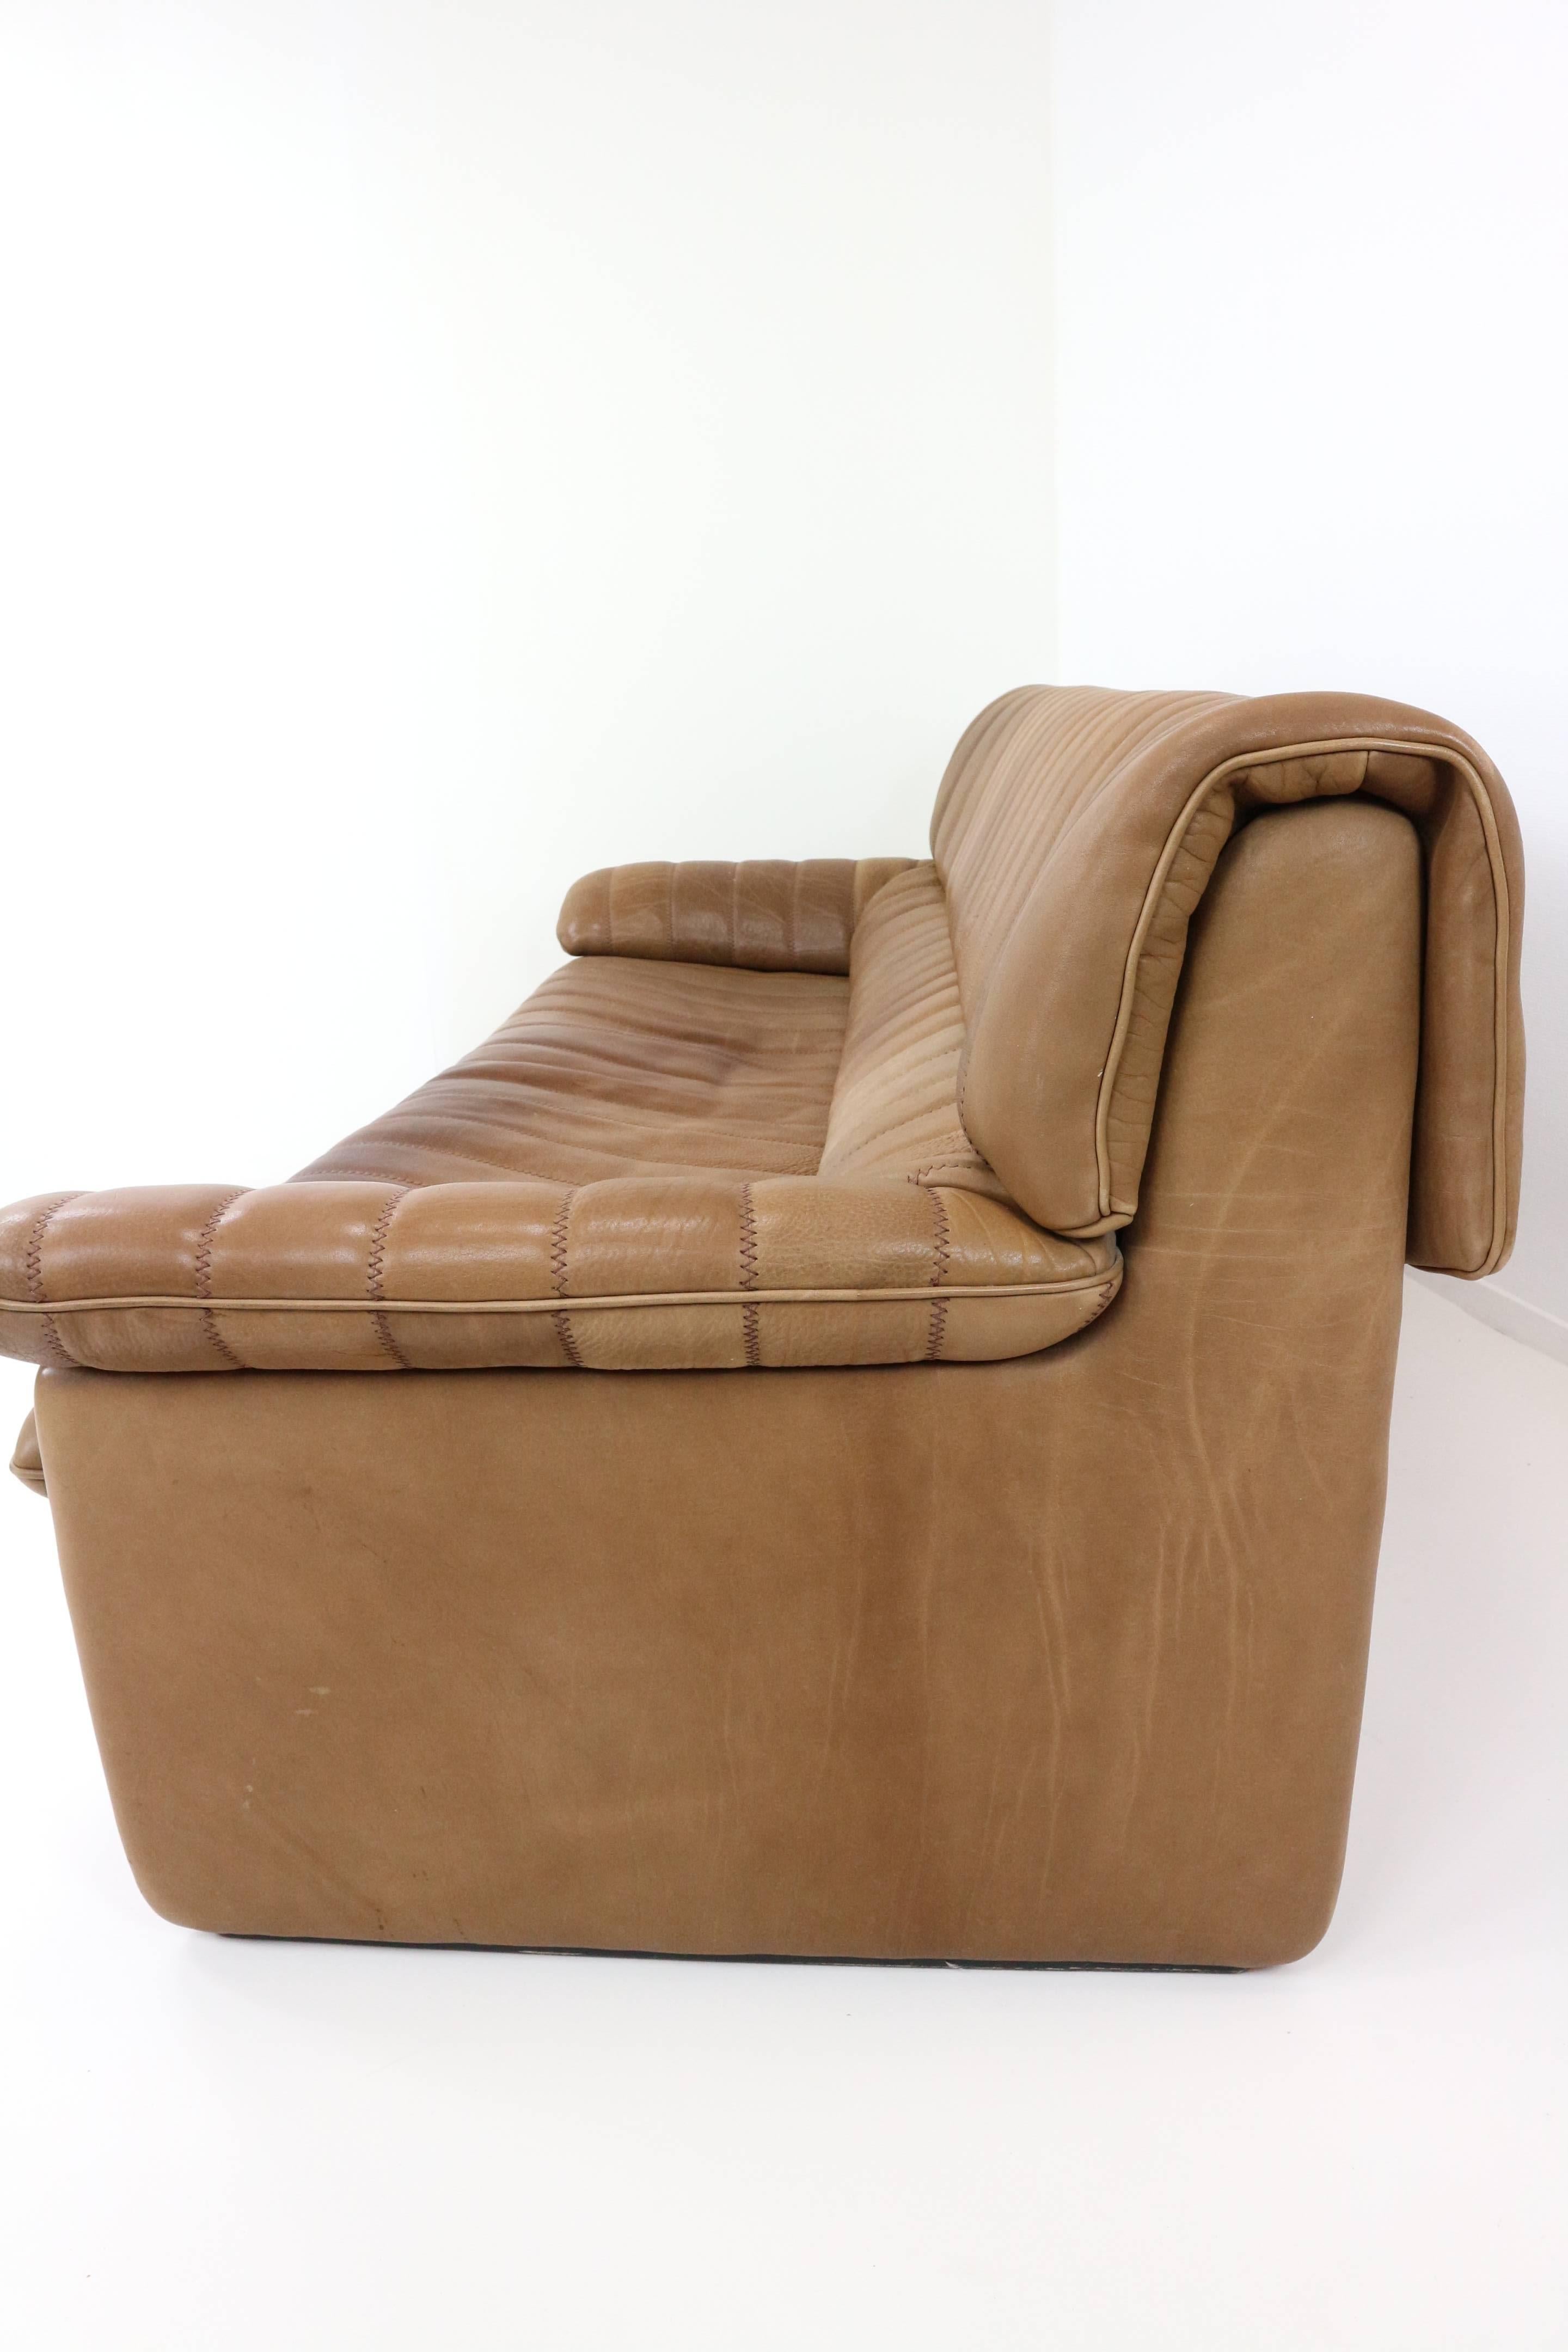 Swiss De Sede Ds-85 Leather Three-Seat, 1970s